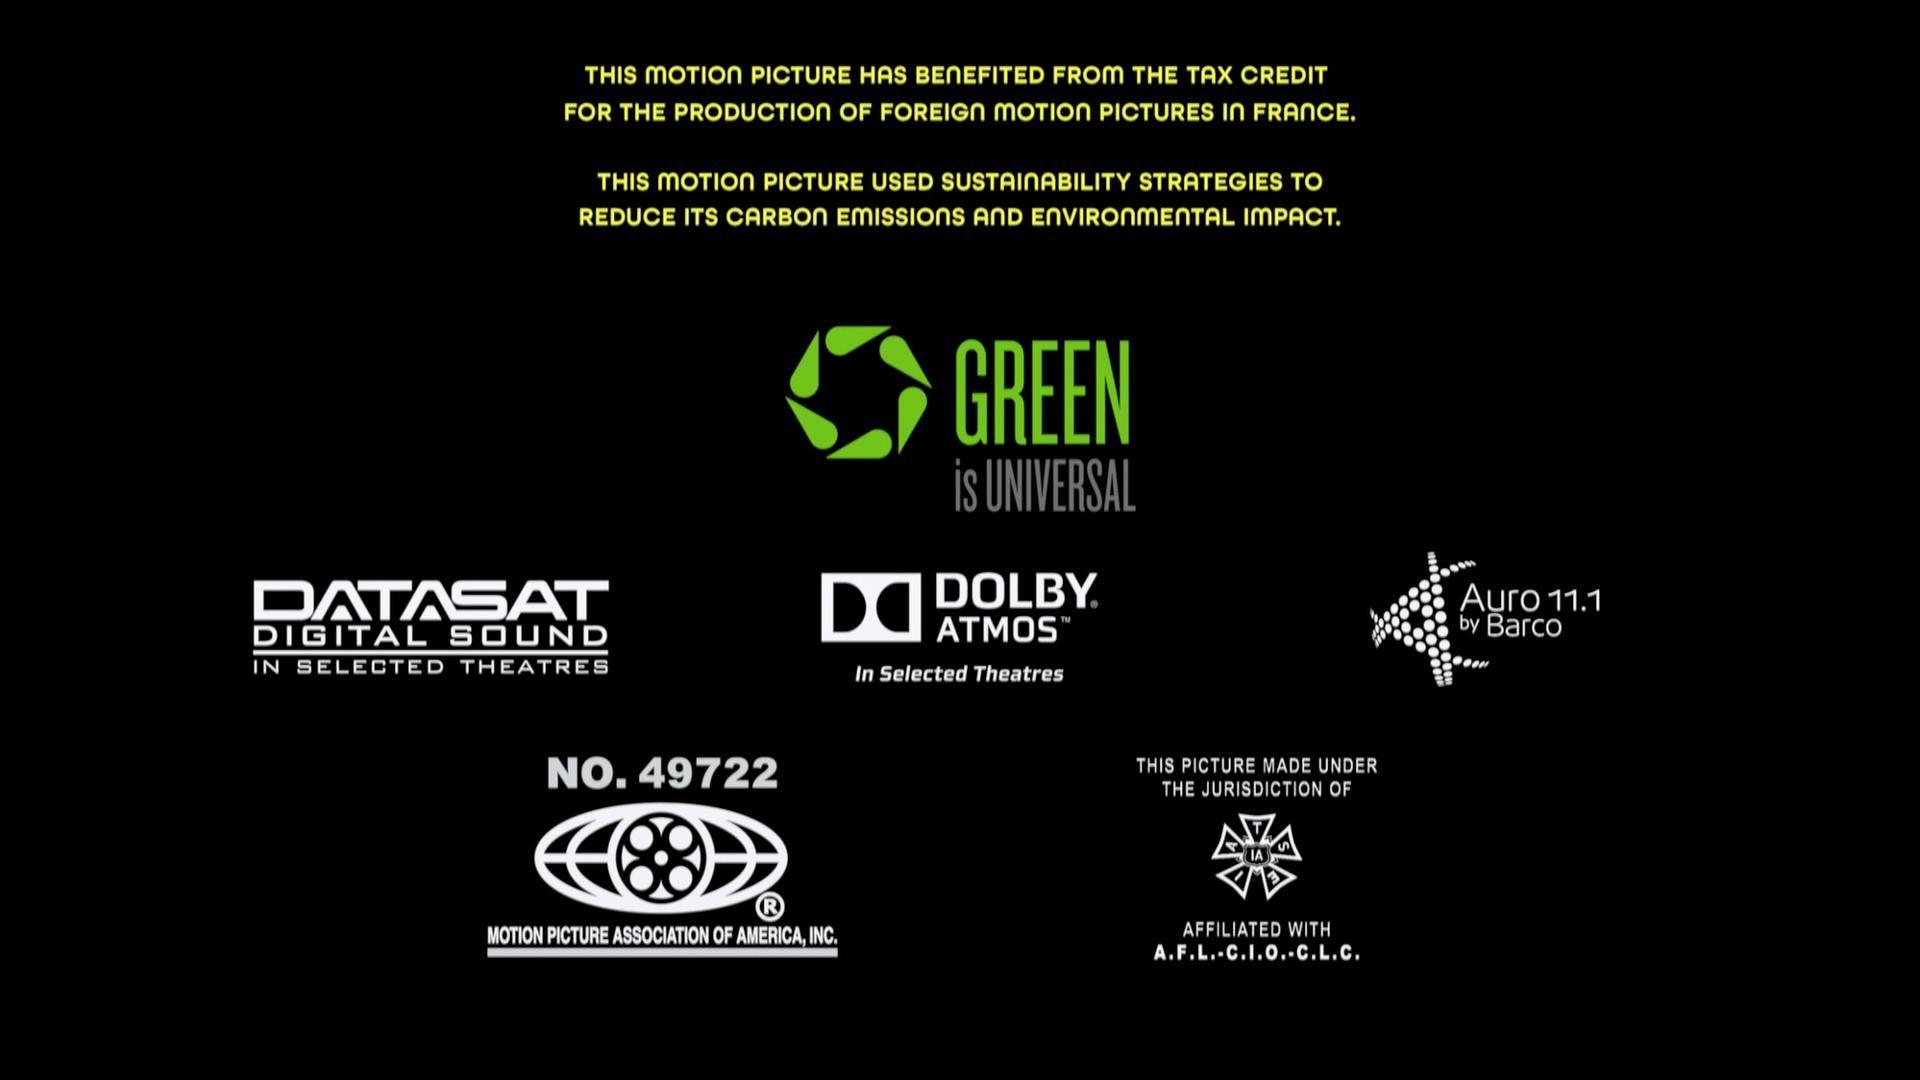 Dolby laboratories provides a logo use sony dynamic digital sound credits v...